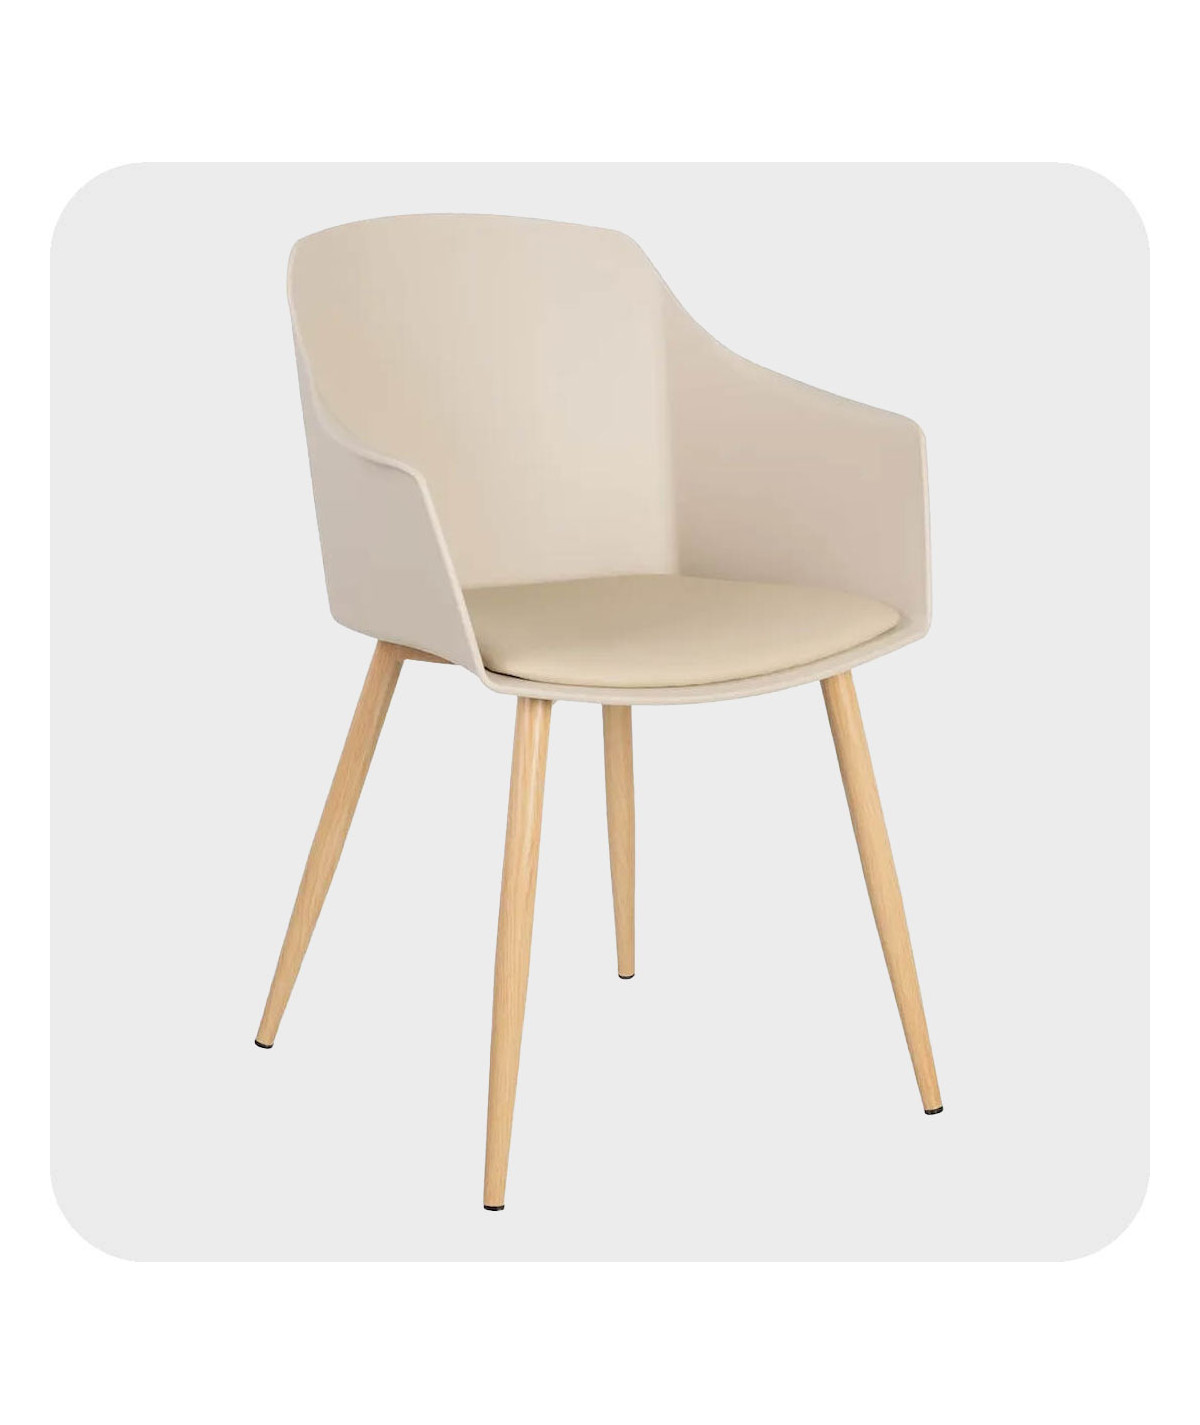 4 chaises beige design avec coussin - Cumple - Yesdeko